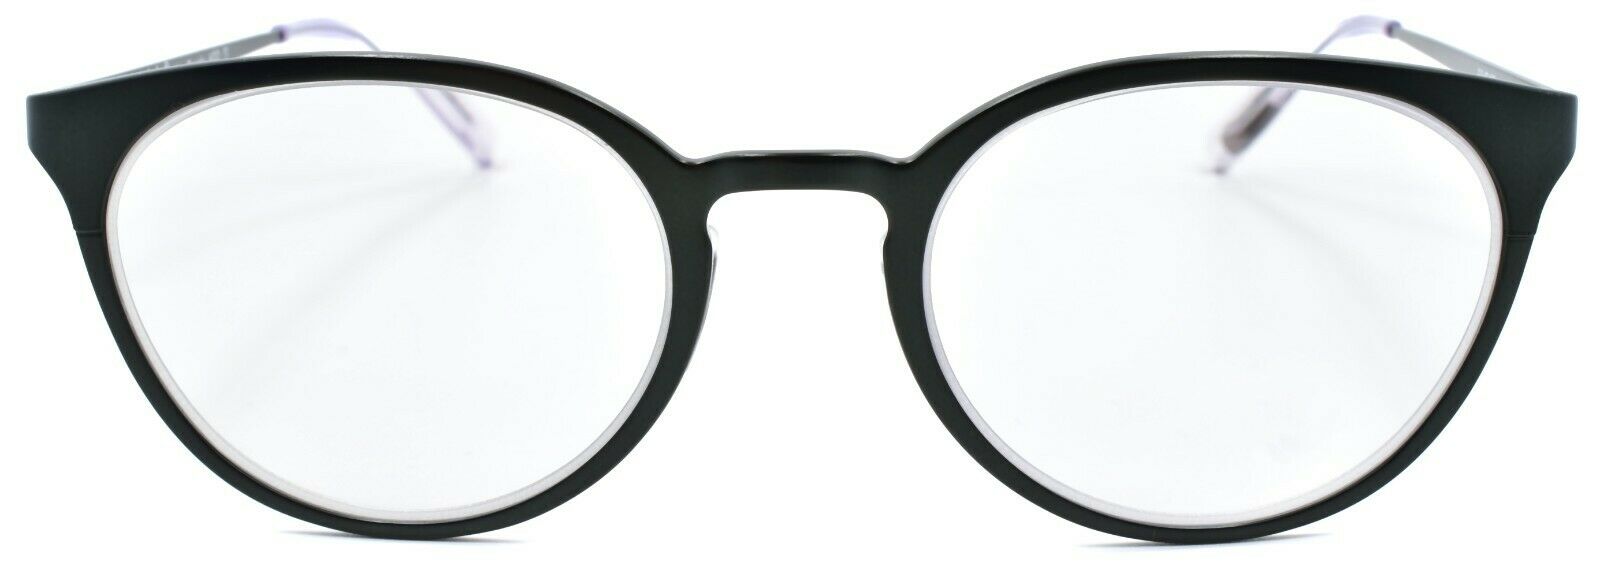 2-Eyebobs Jim Dandy 600 11 Reading Glasses Dark Green +3.00-842754138116-IKSpecs